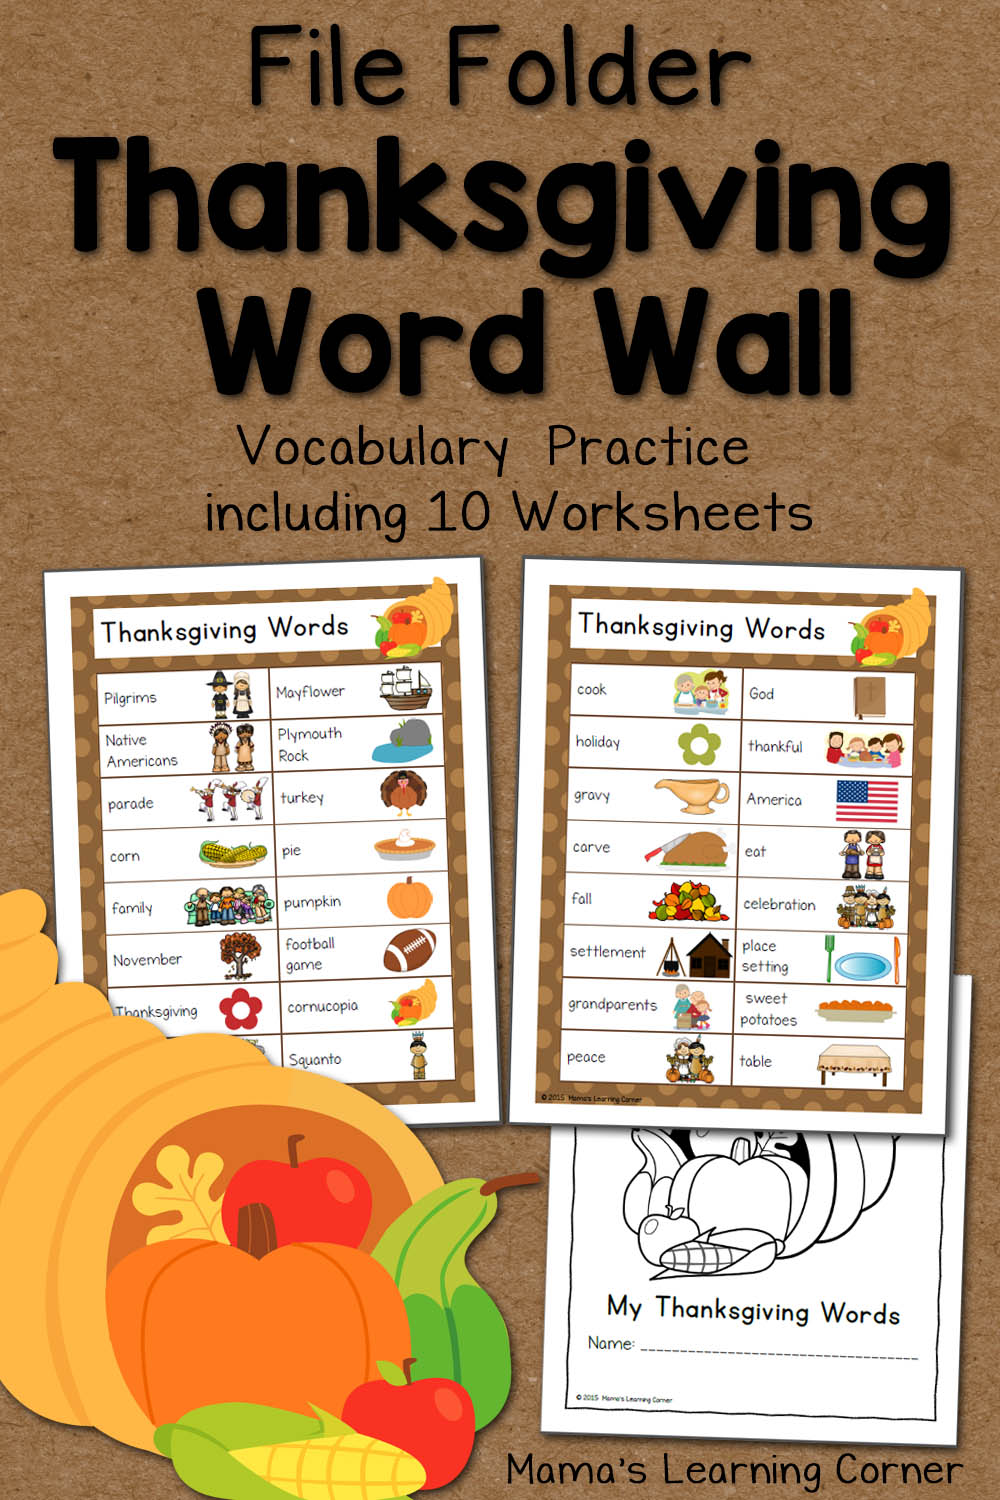 File Folder Word Wall: Thanksgiving! - Mamas Learning Corner